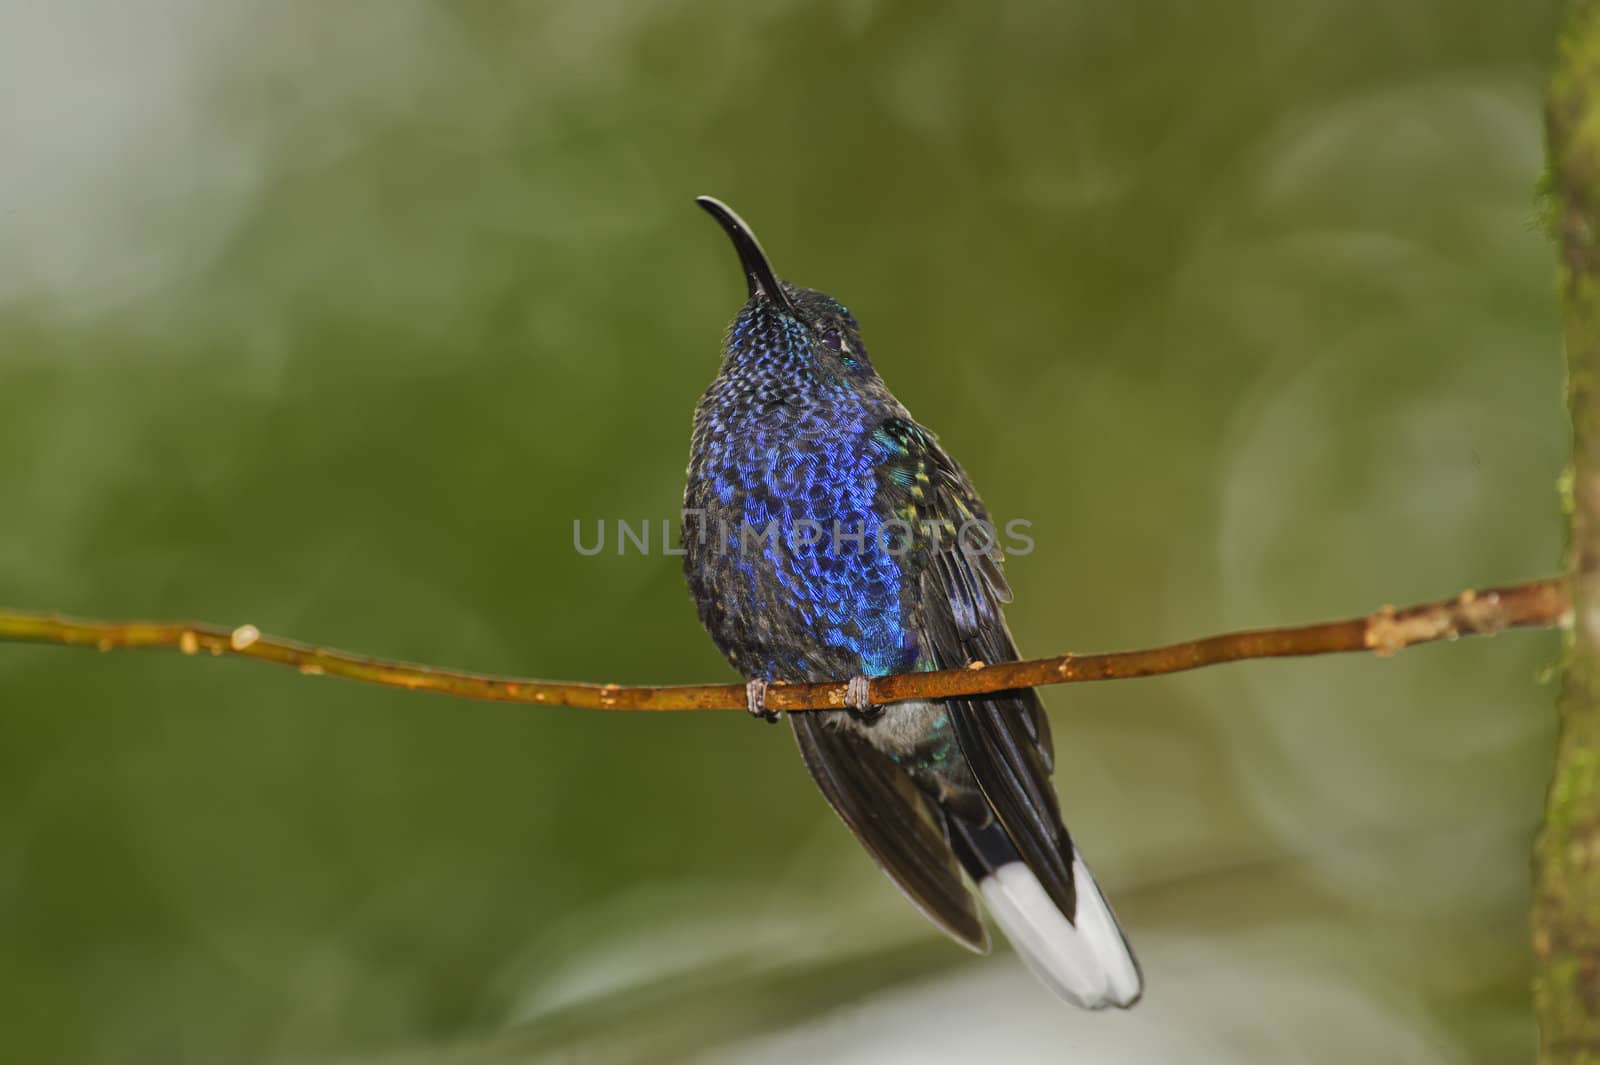 Small hummingbird resting after feeding, Monteverde Area, Costa Rica.